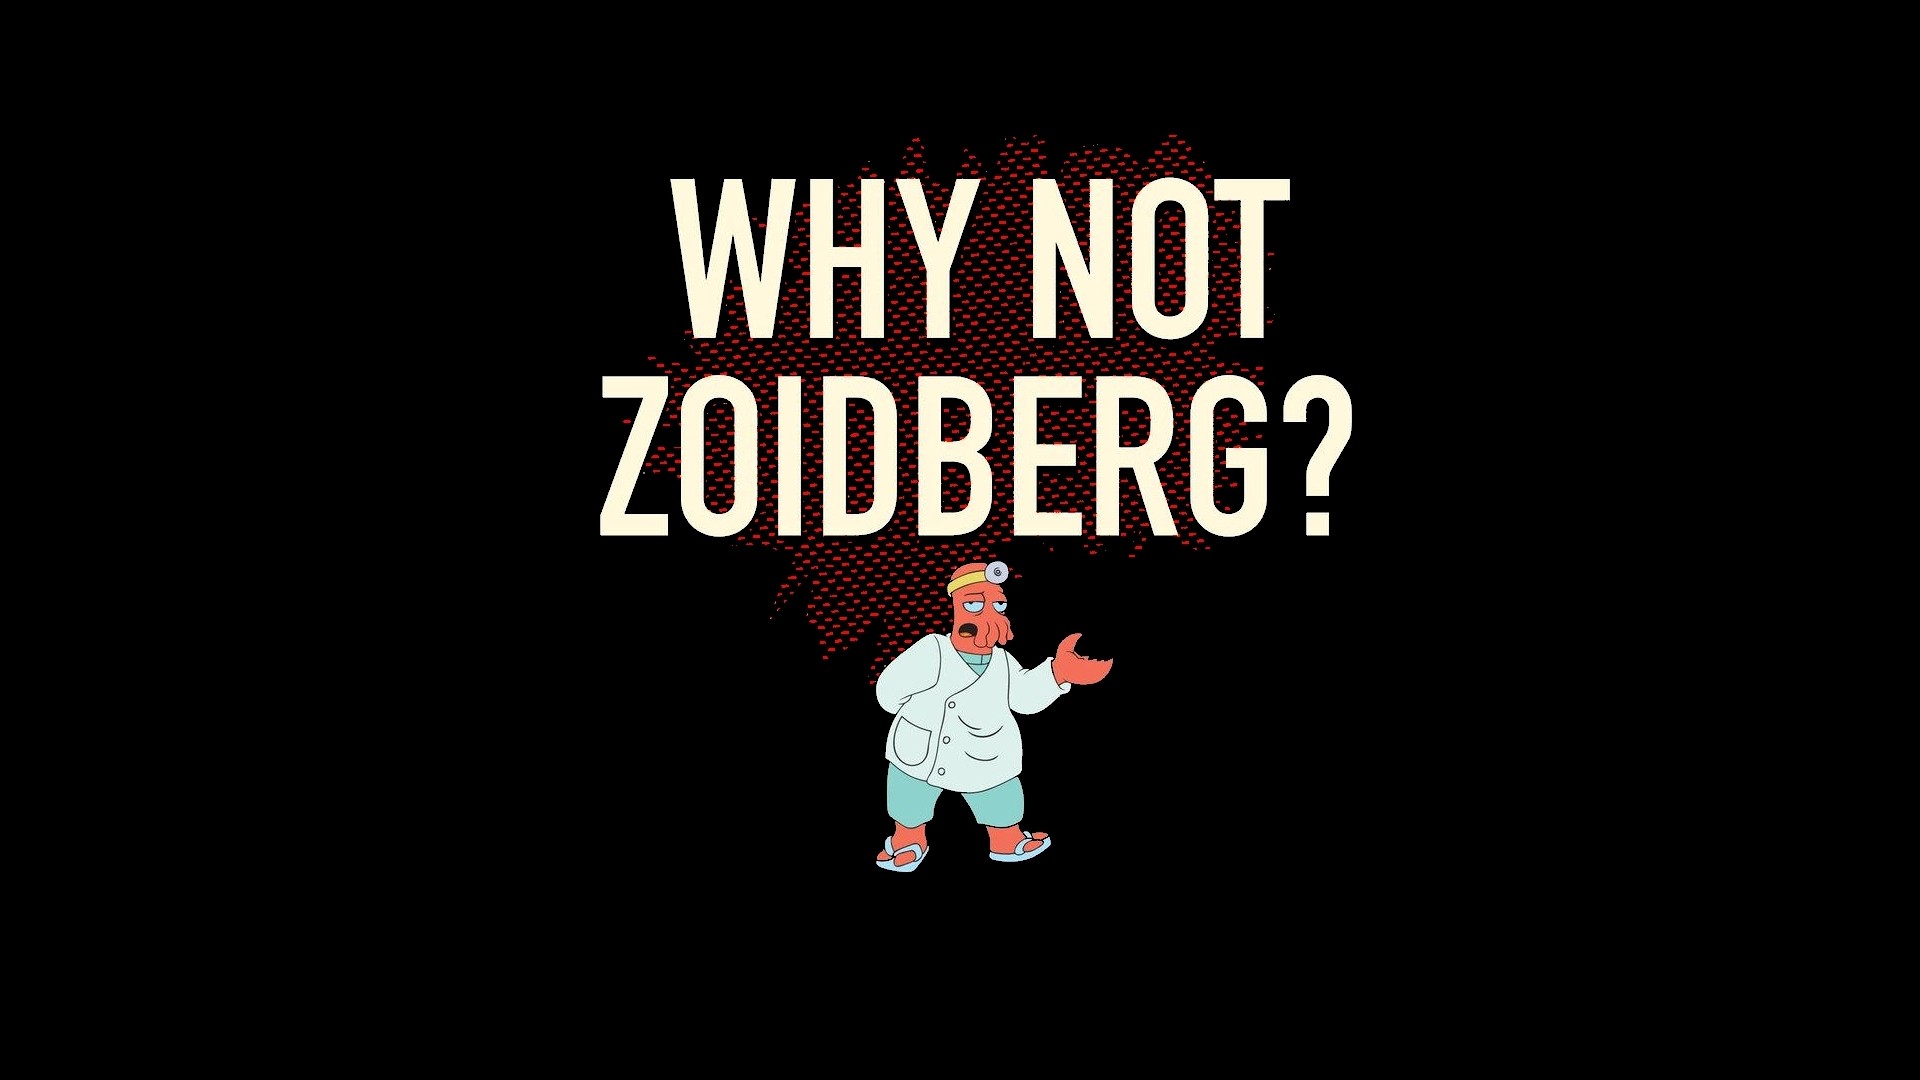 Futurama, funny, Dr Zoidberg, questions, black background - desktop wallpaper